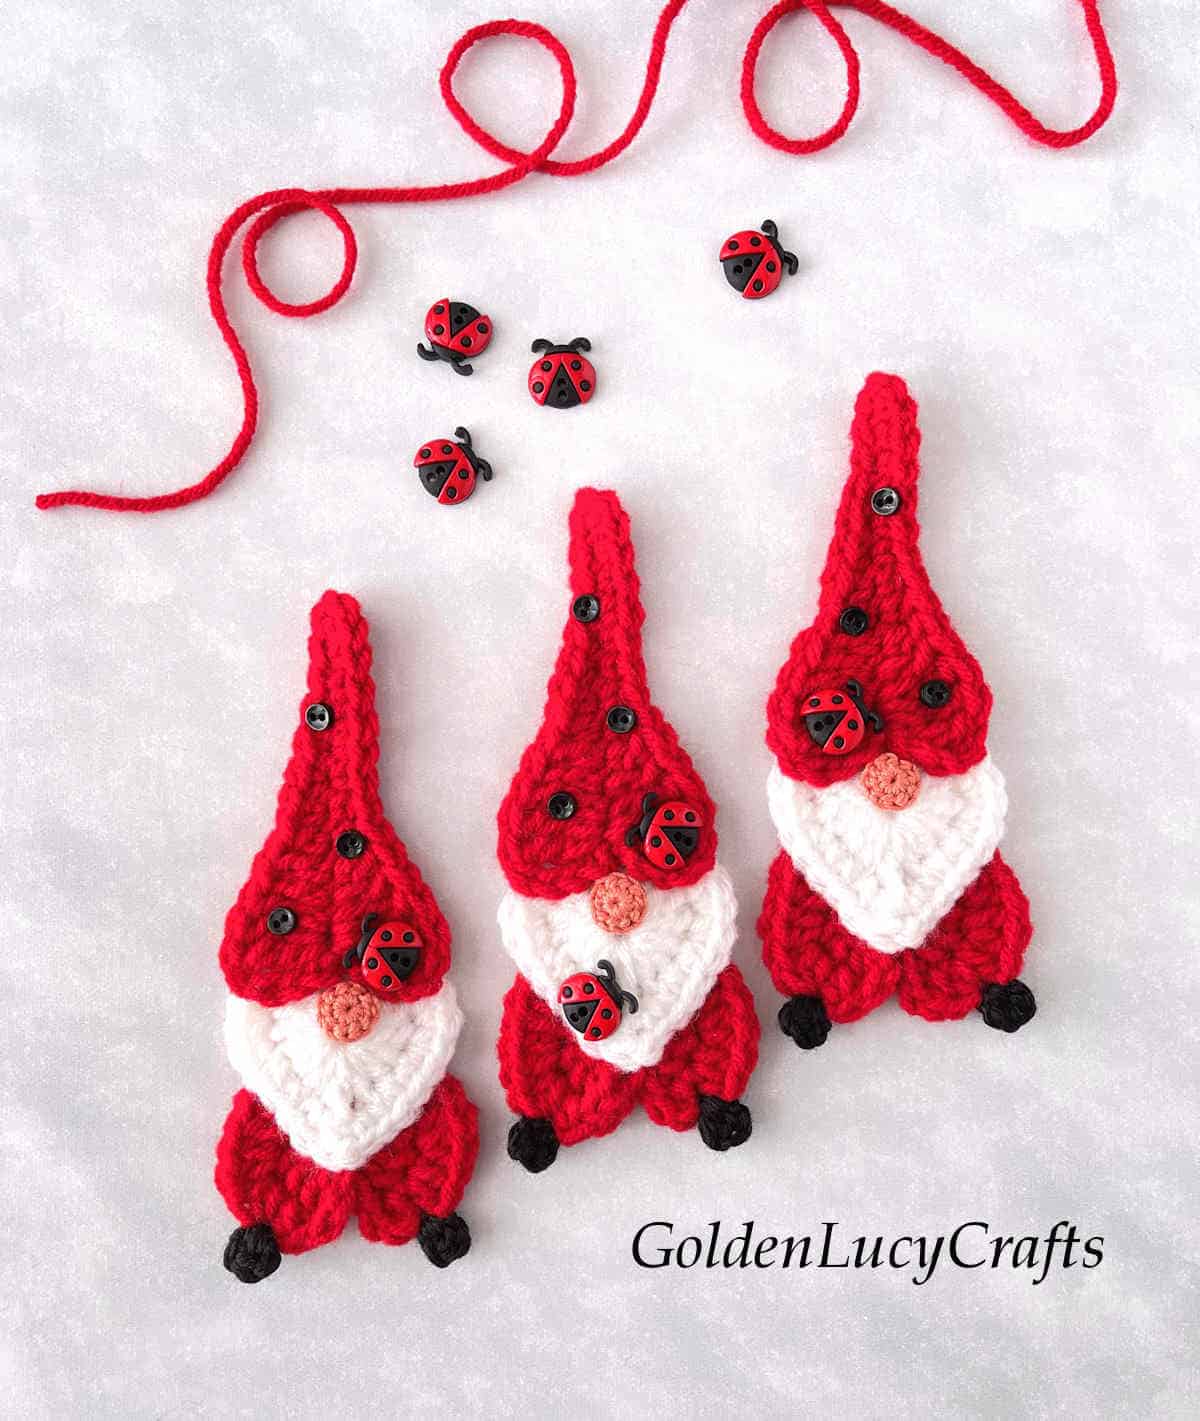 Three crochet ladybug gnome appliques.